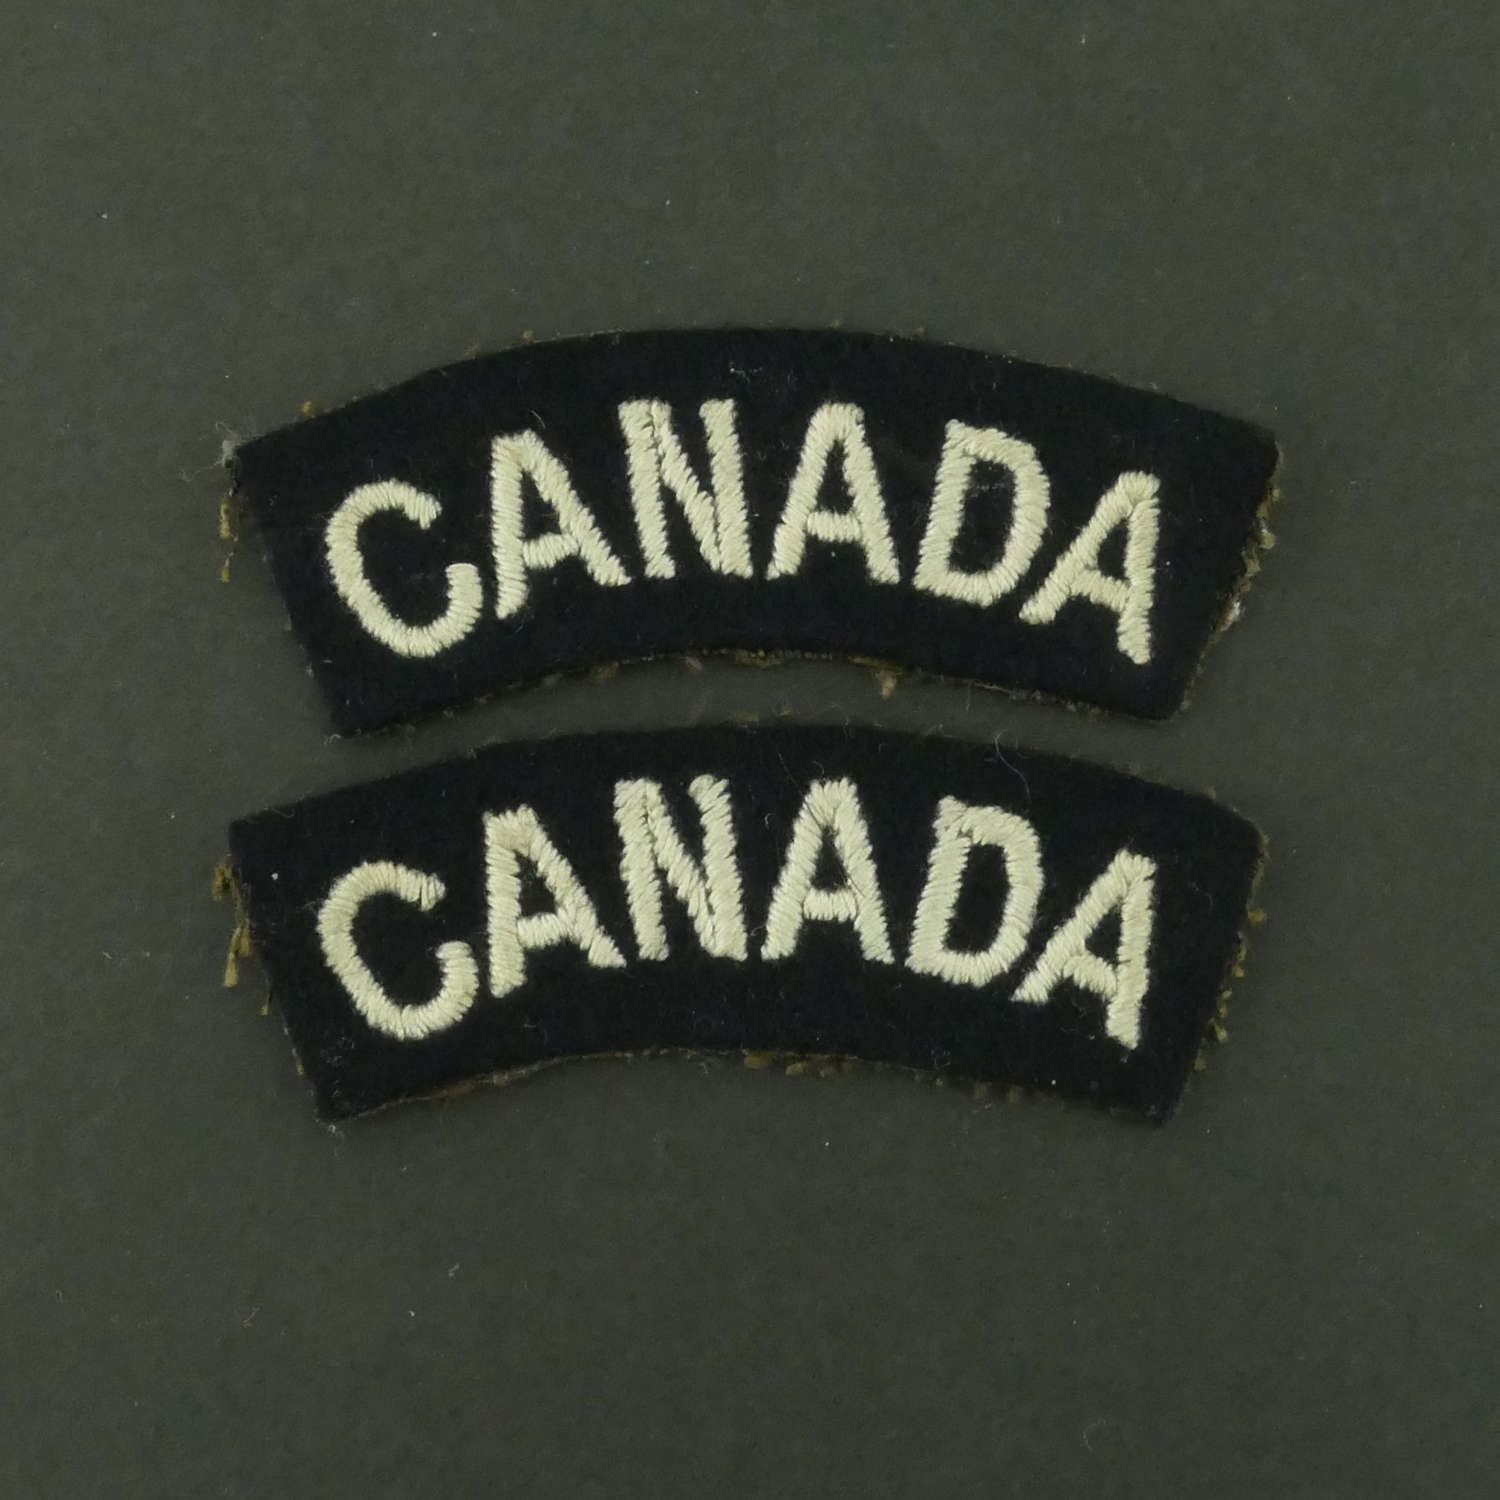 RAF 'Canada' Nationality titles